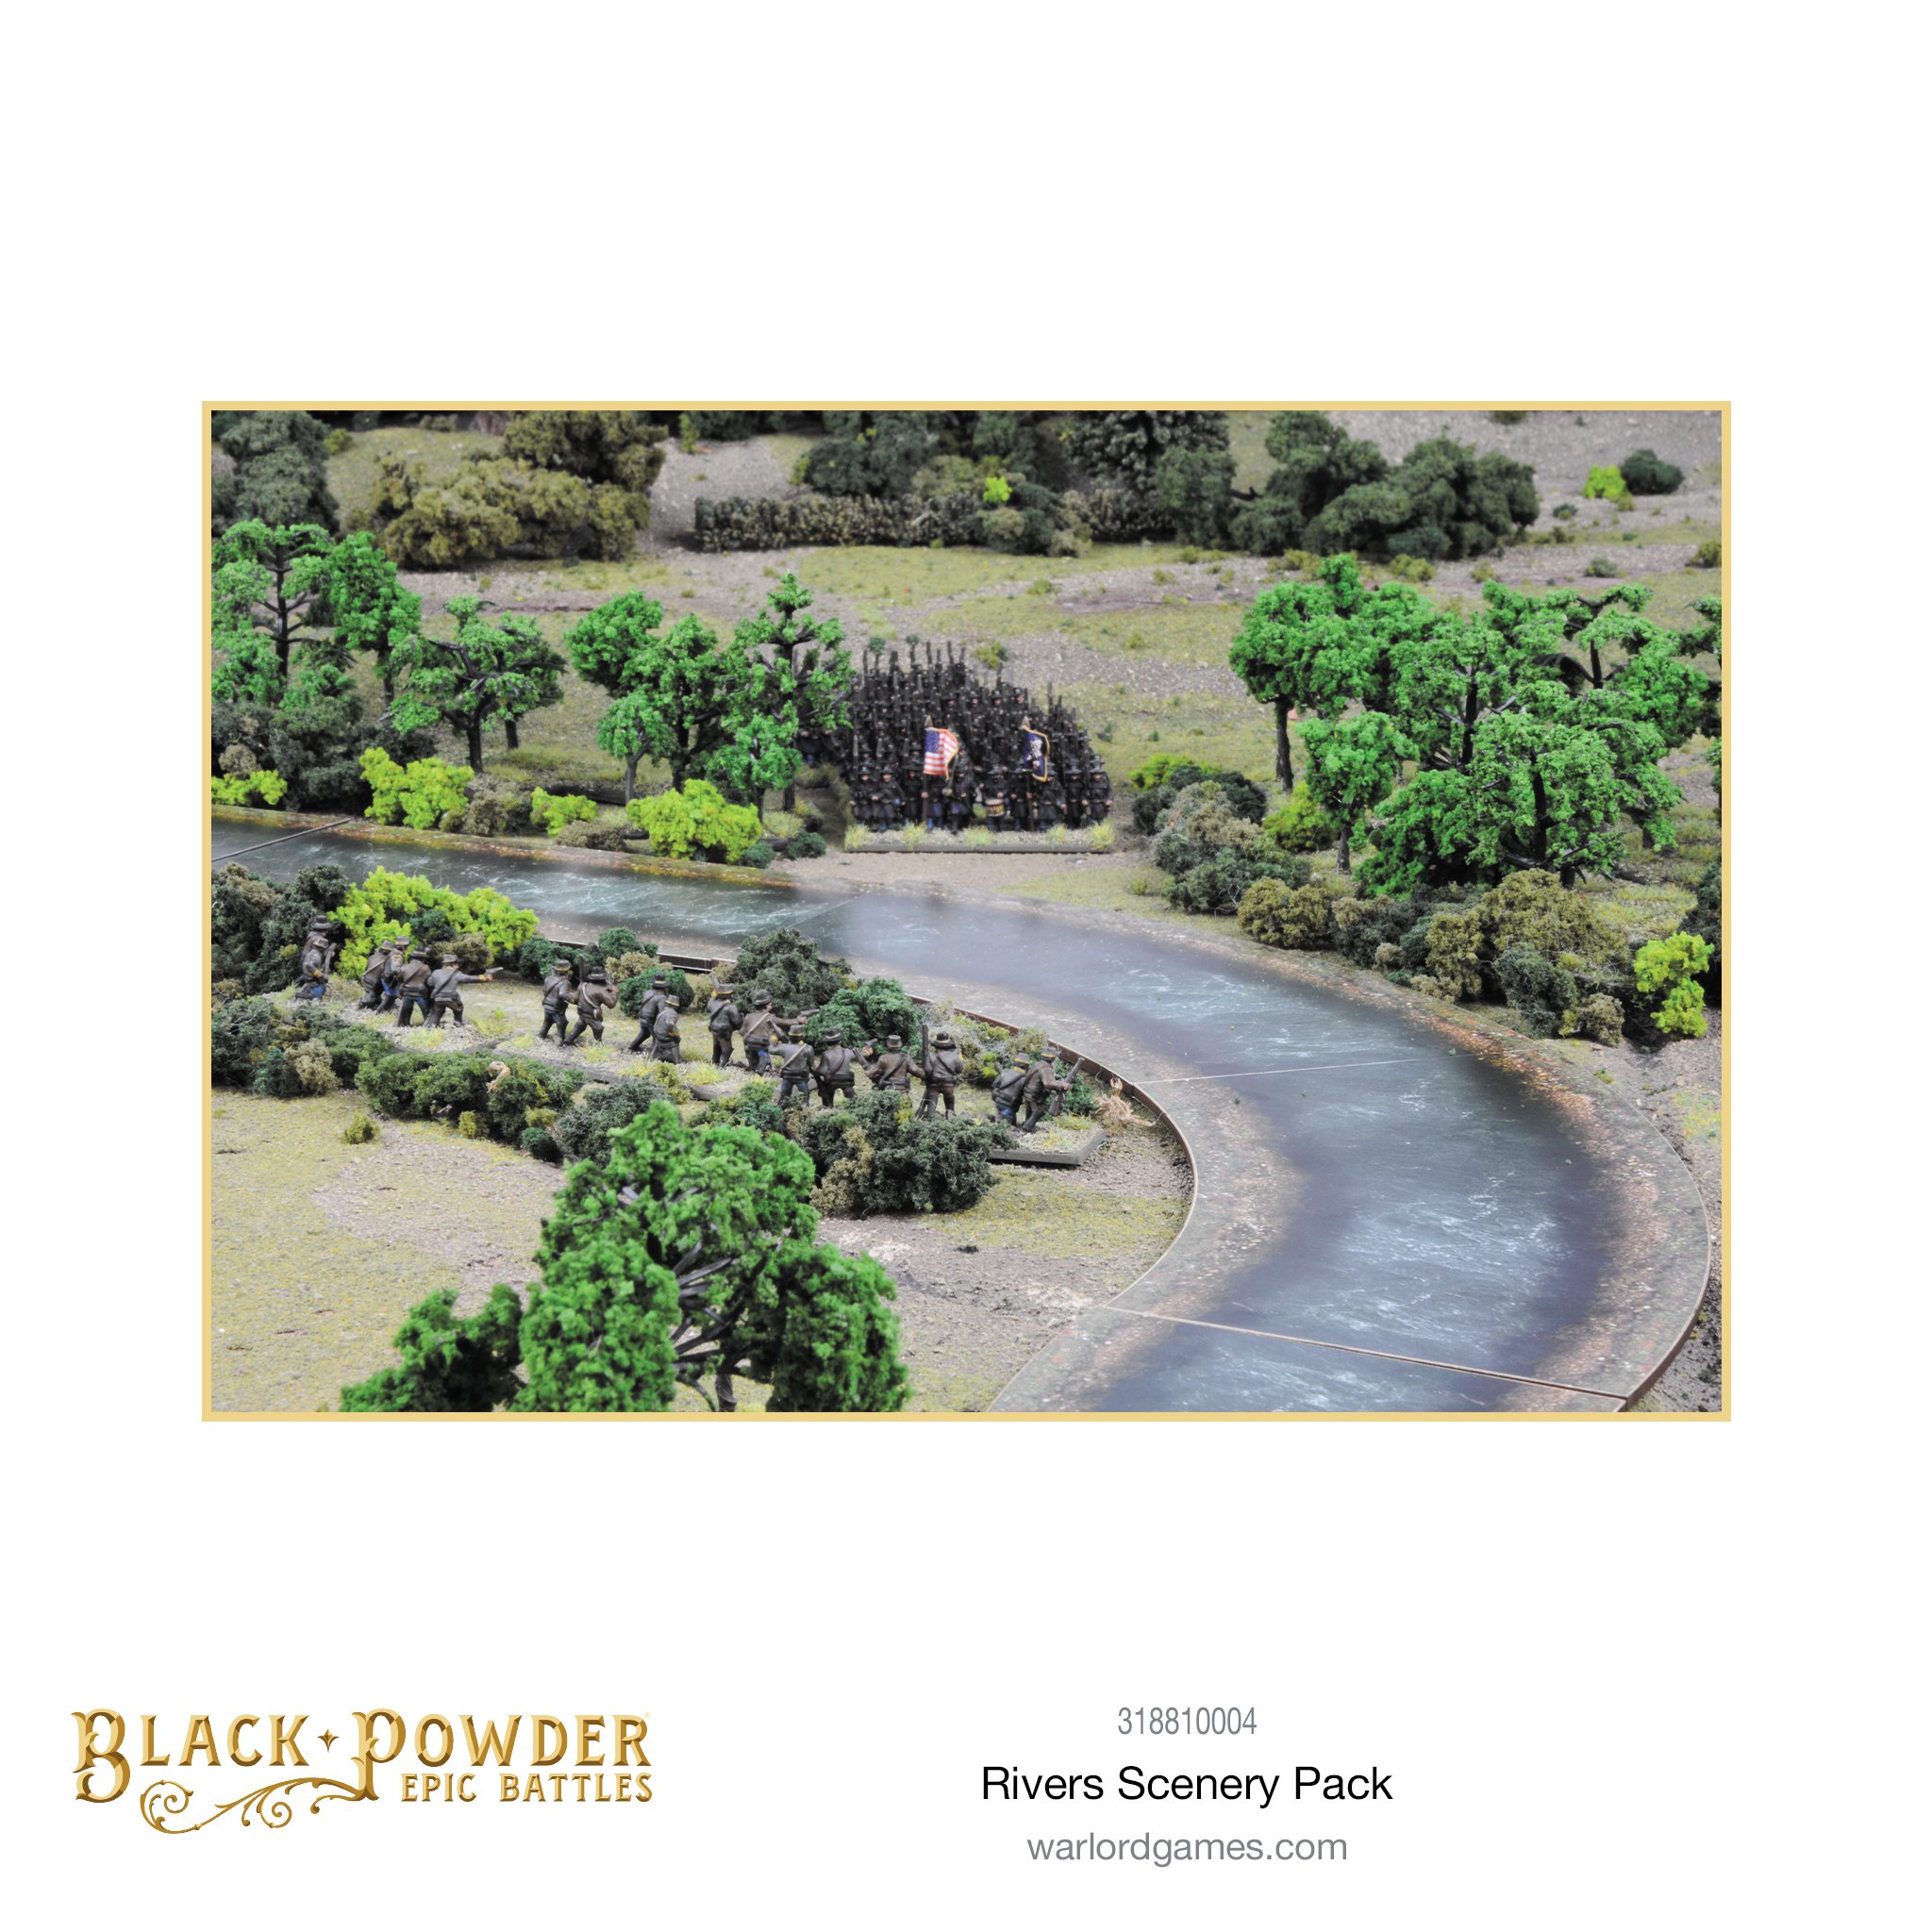 Rivers Scenery Pack - Black Powder Epic Battles